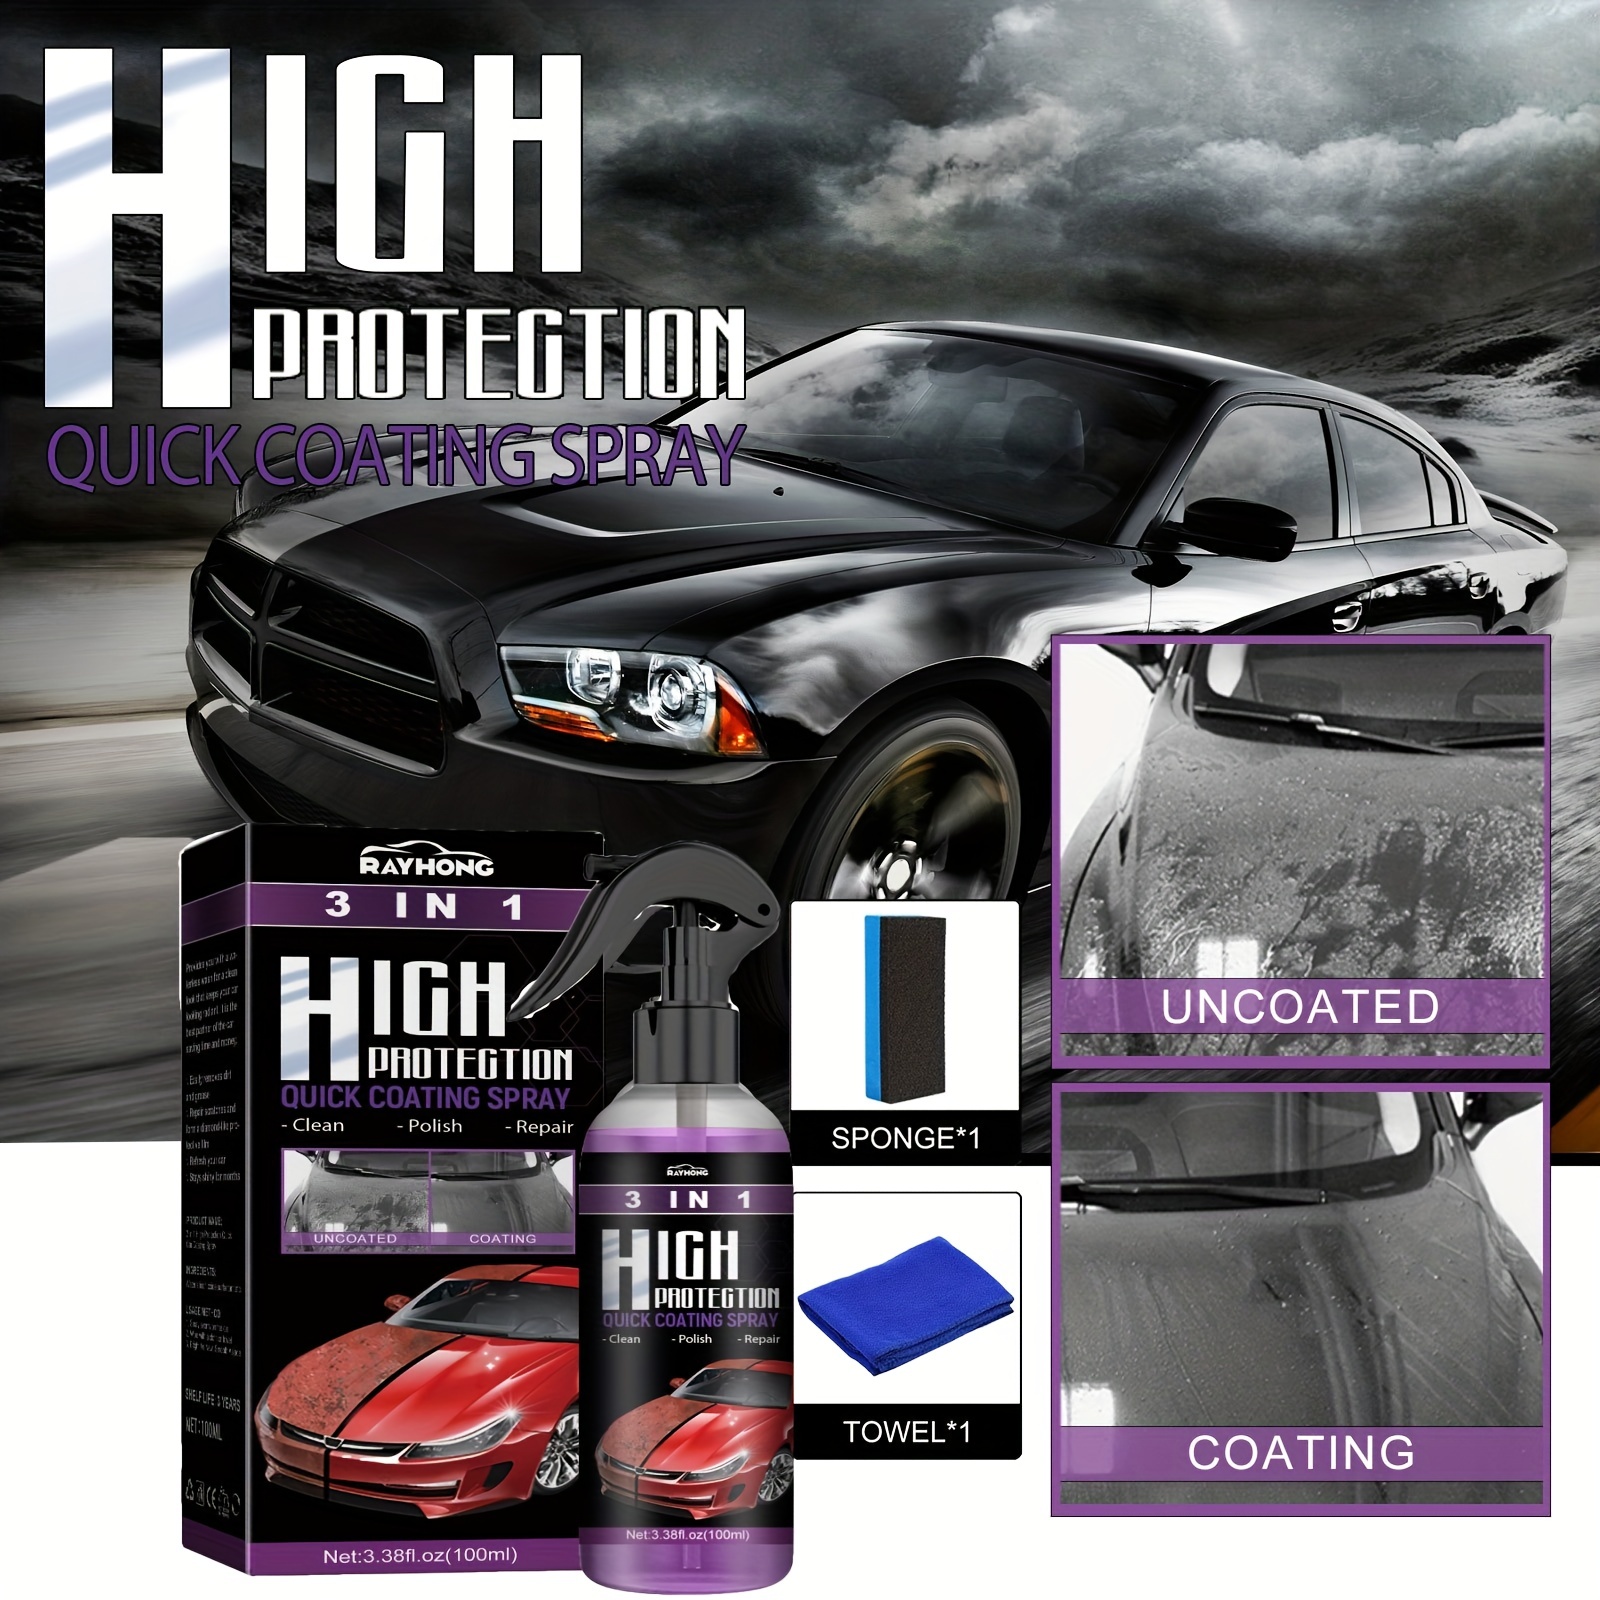 Rayhong Spray Coating Agent, Multi-functional Coating Renewal Agent, 3 in 1 Ceramic Car Coating Spray, High Protection Quick Car Coating Spray (1 Pc)